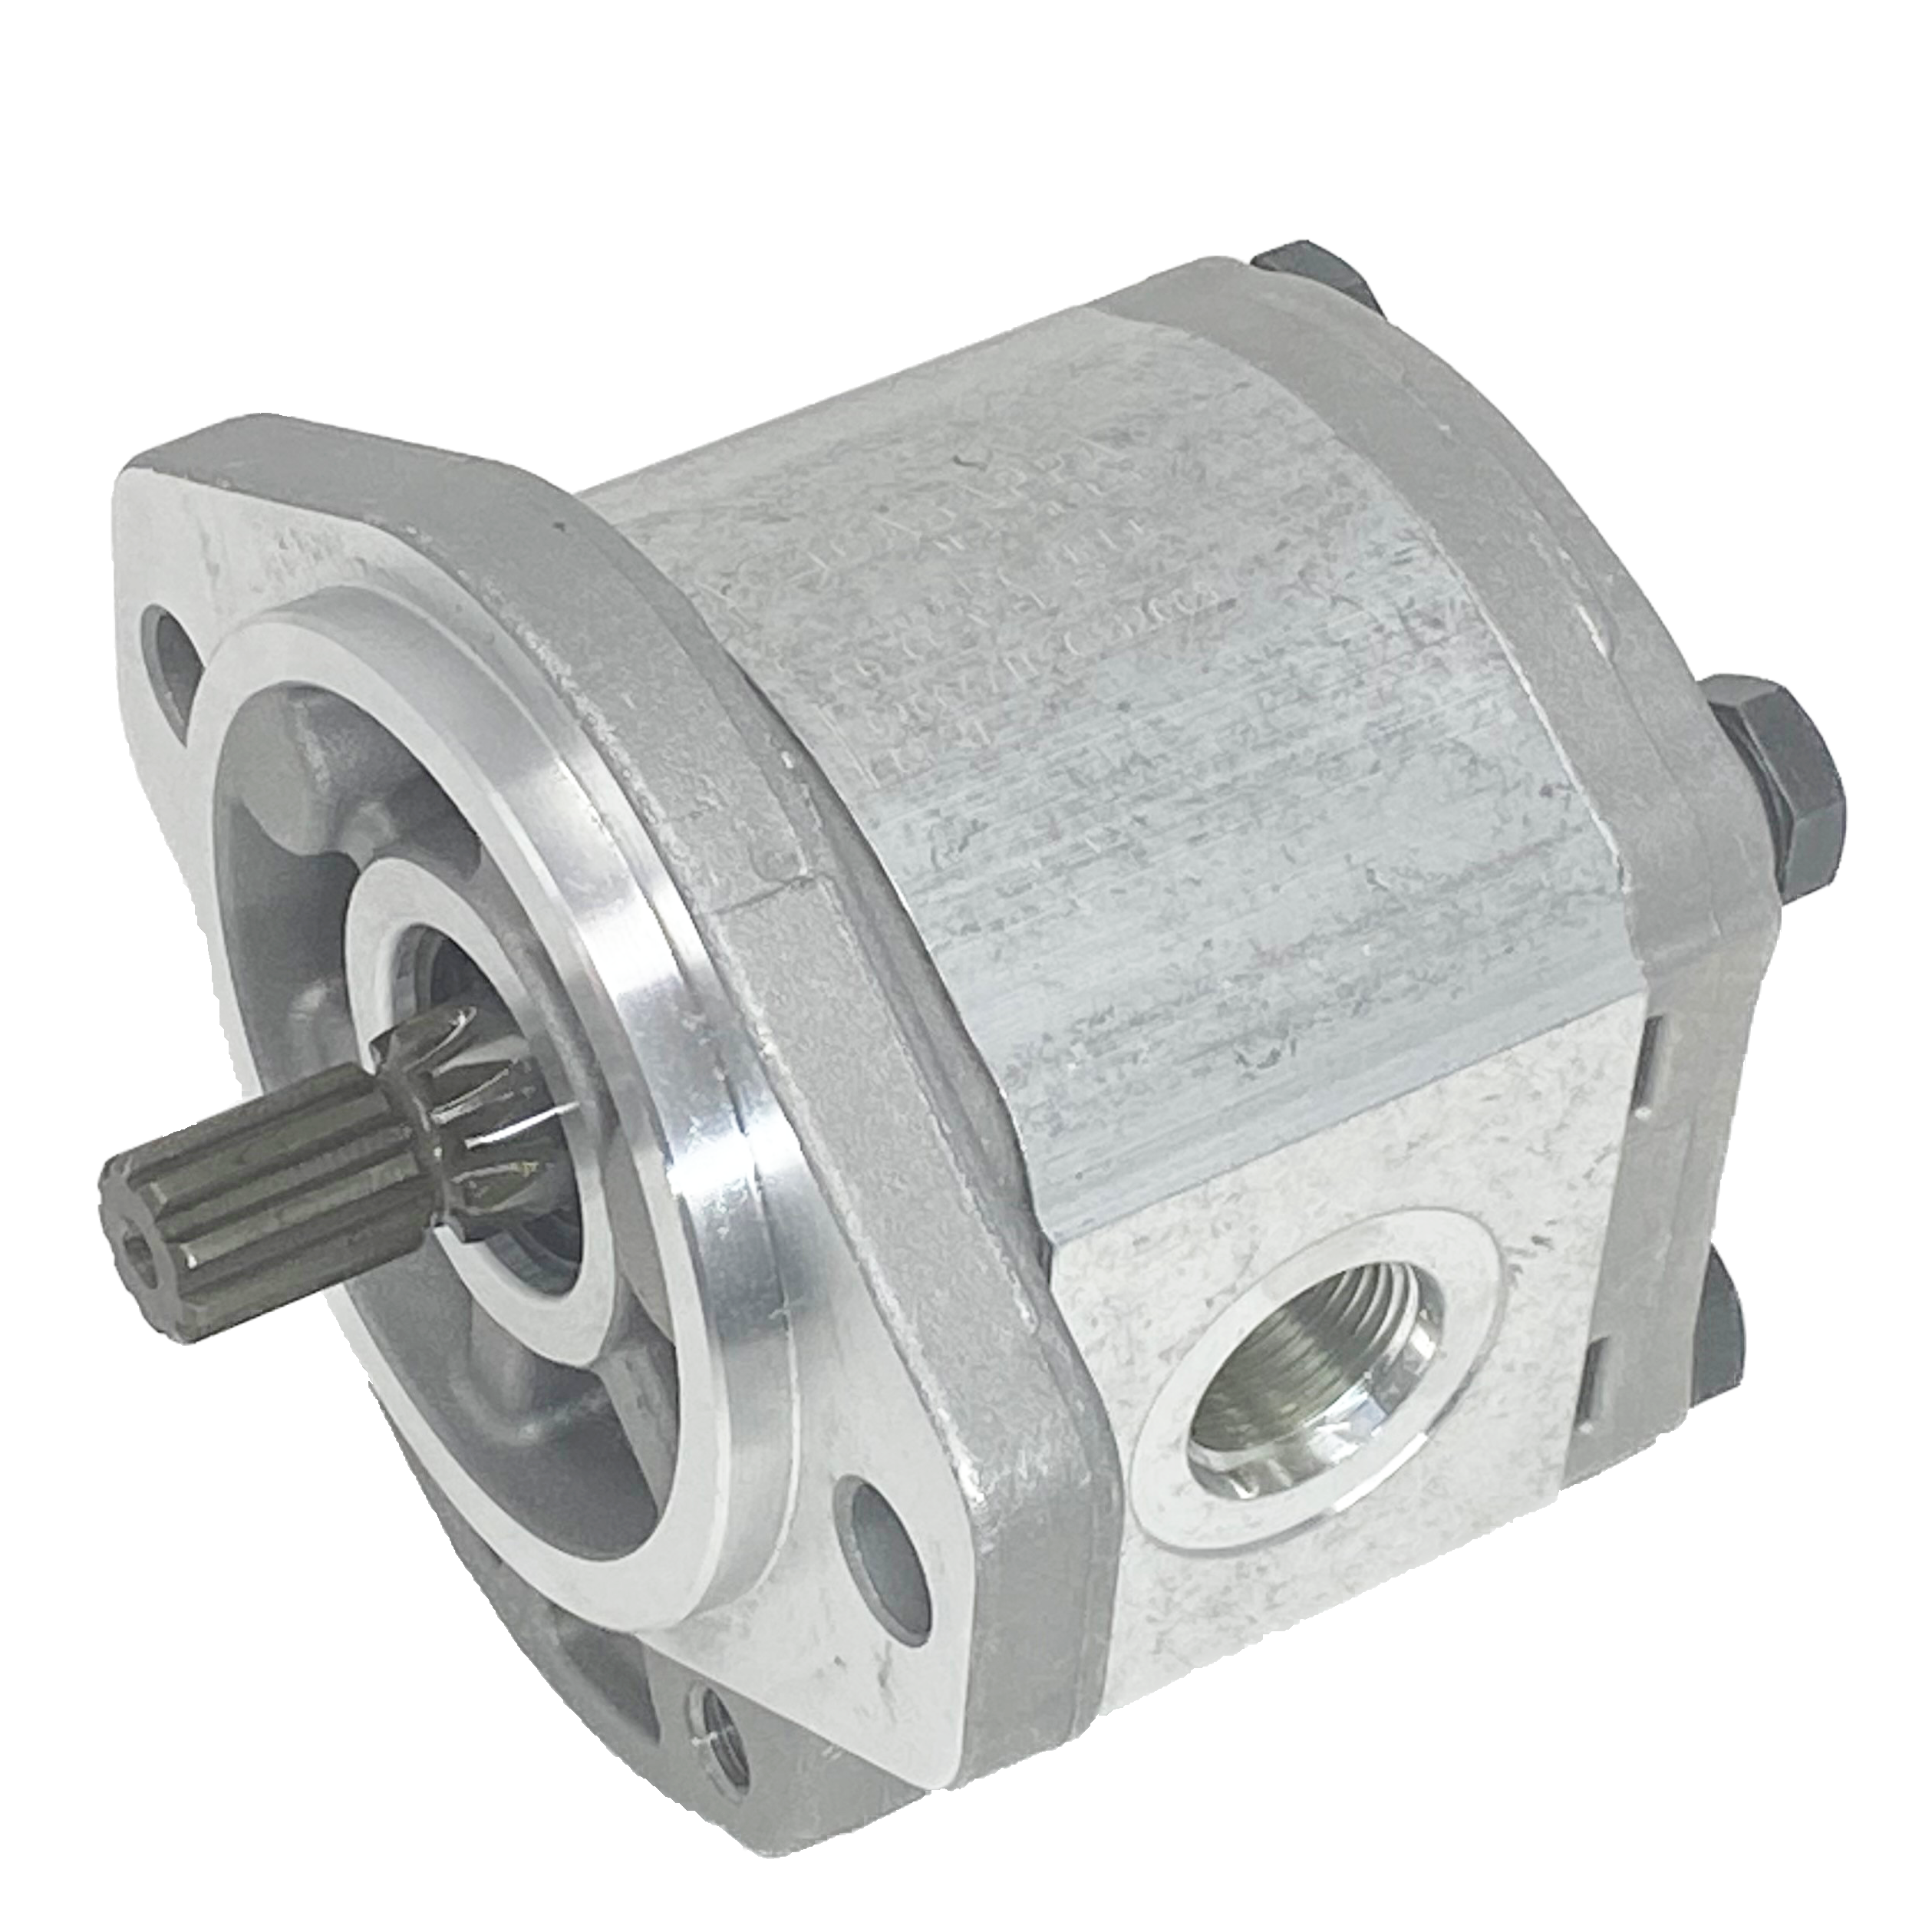 PLM20.14R0-07S1-LOC/OD-N-EL : Casappa Polaris Gear Motor, 14.53cc, 3625psi Rated, 3500RPM, Reversible Rear External Drain, 11T 16/32dp Shaft, SAE A 2-Bolt Flange, 0.625 (5/8") #10 SAE Inlet, 0.75 (3/4") #12 SAE Outlet, Aluminum Body & Flange